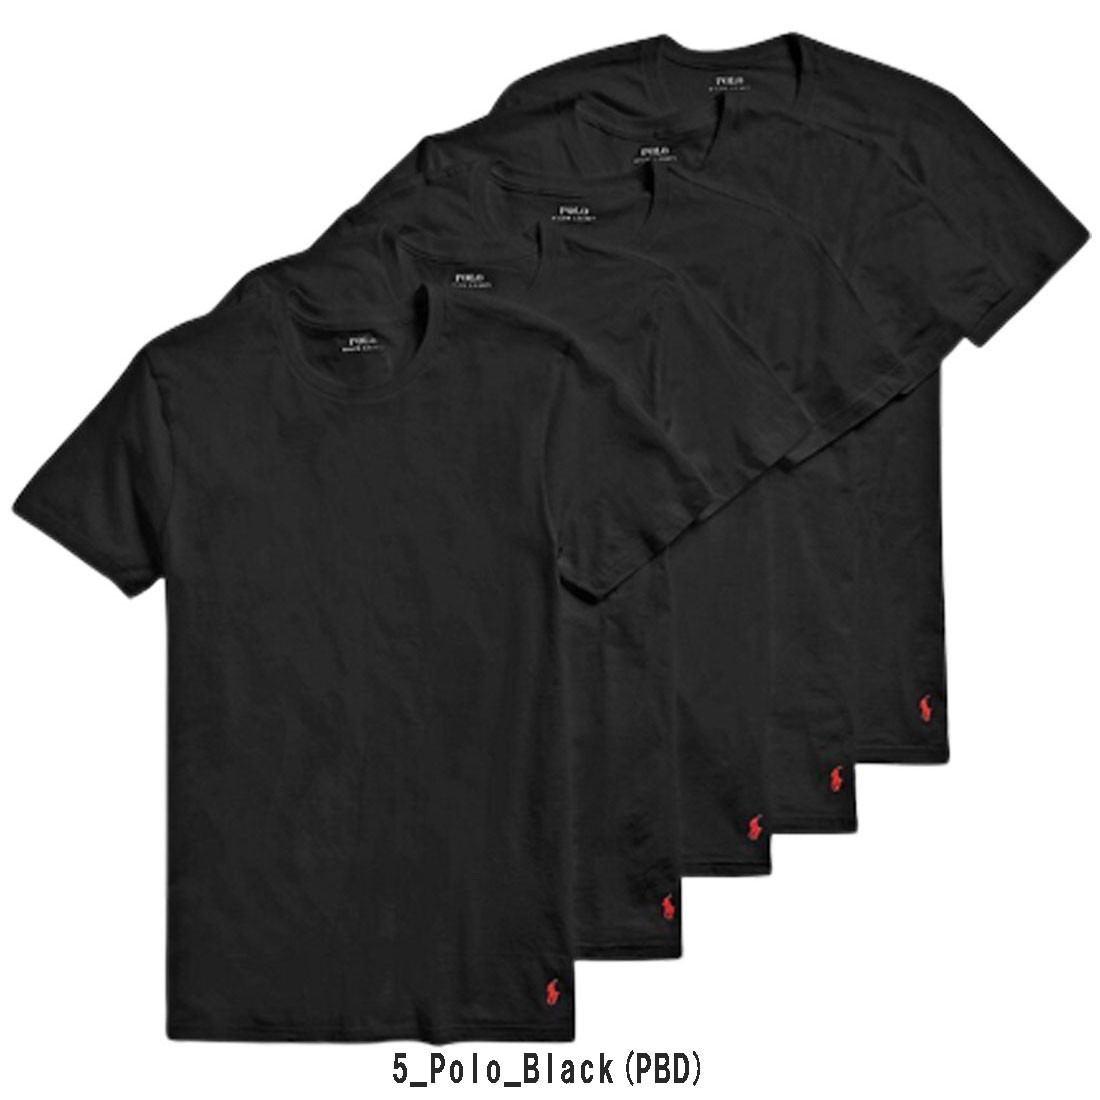 (SALE)POLO RALPH LAUREN(ポロ ラルフローレン)Tシャツ 5枚セット Cotton Classic Fit NCCNP5 5_Polo_Black(PBD) M pr32-nccnp5-pbd-m★2